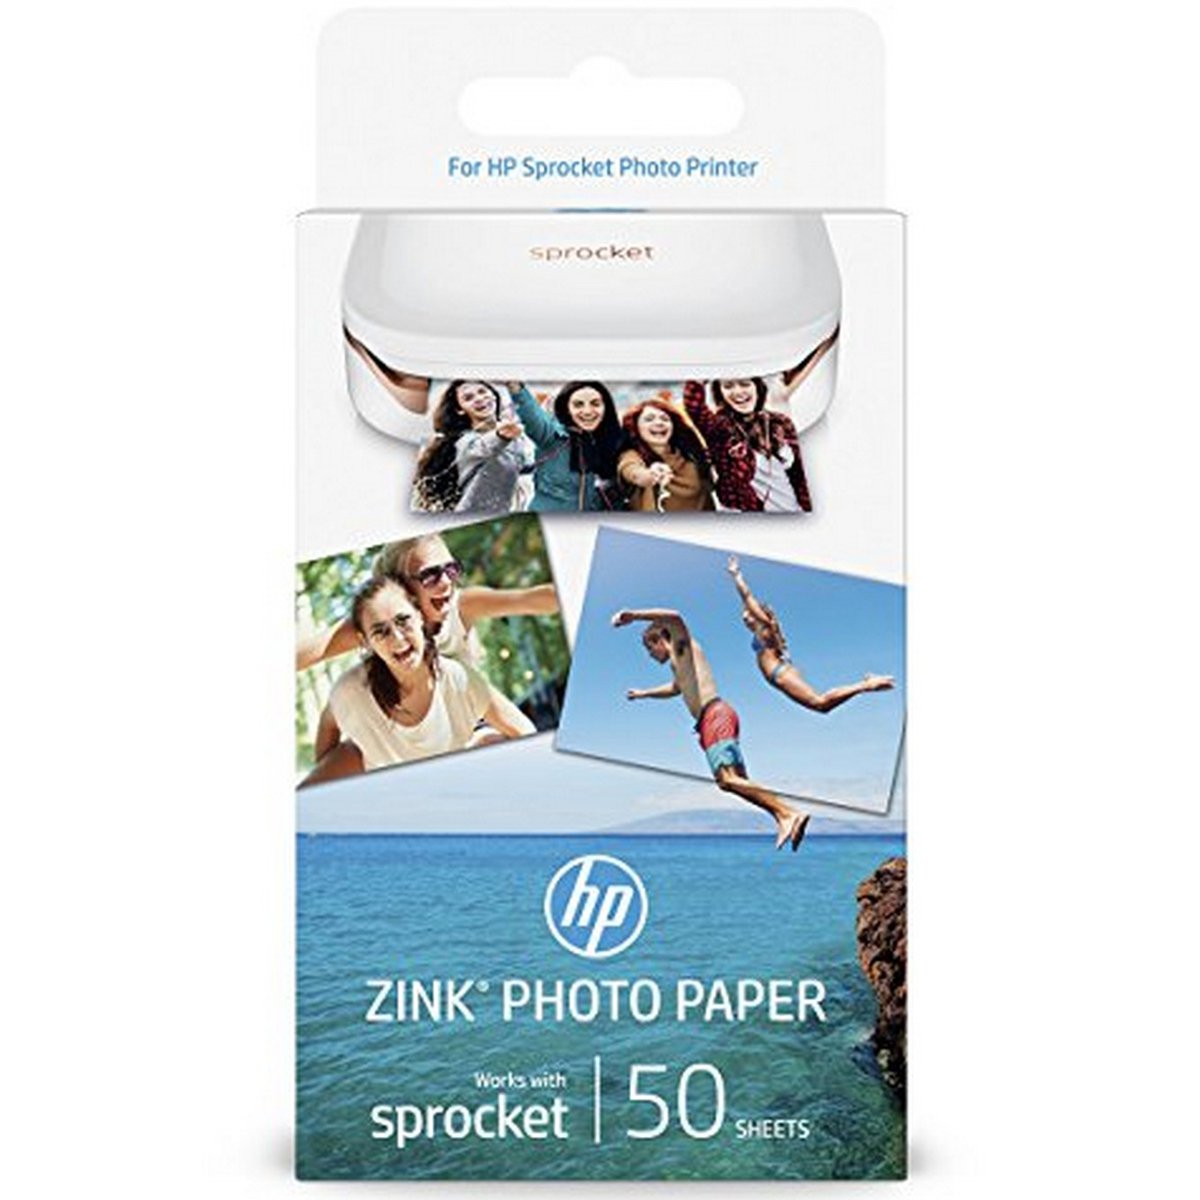 HP Zink Photo Paper for HP Sprocket Printer  50Sheets